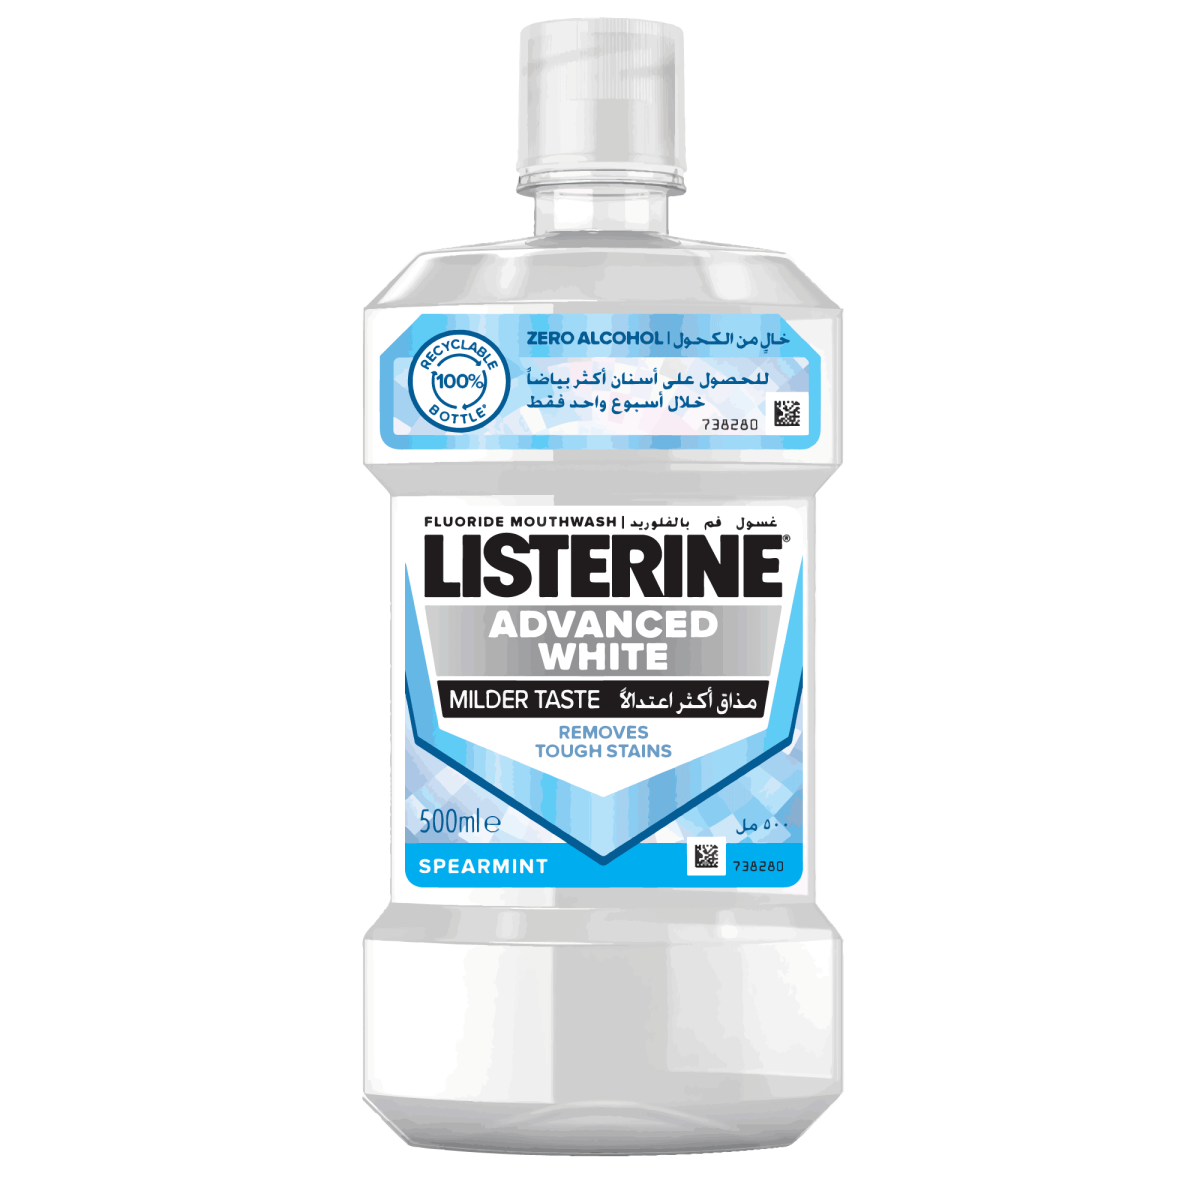 Listerine advanced white milder taste mouthwash